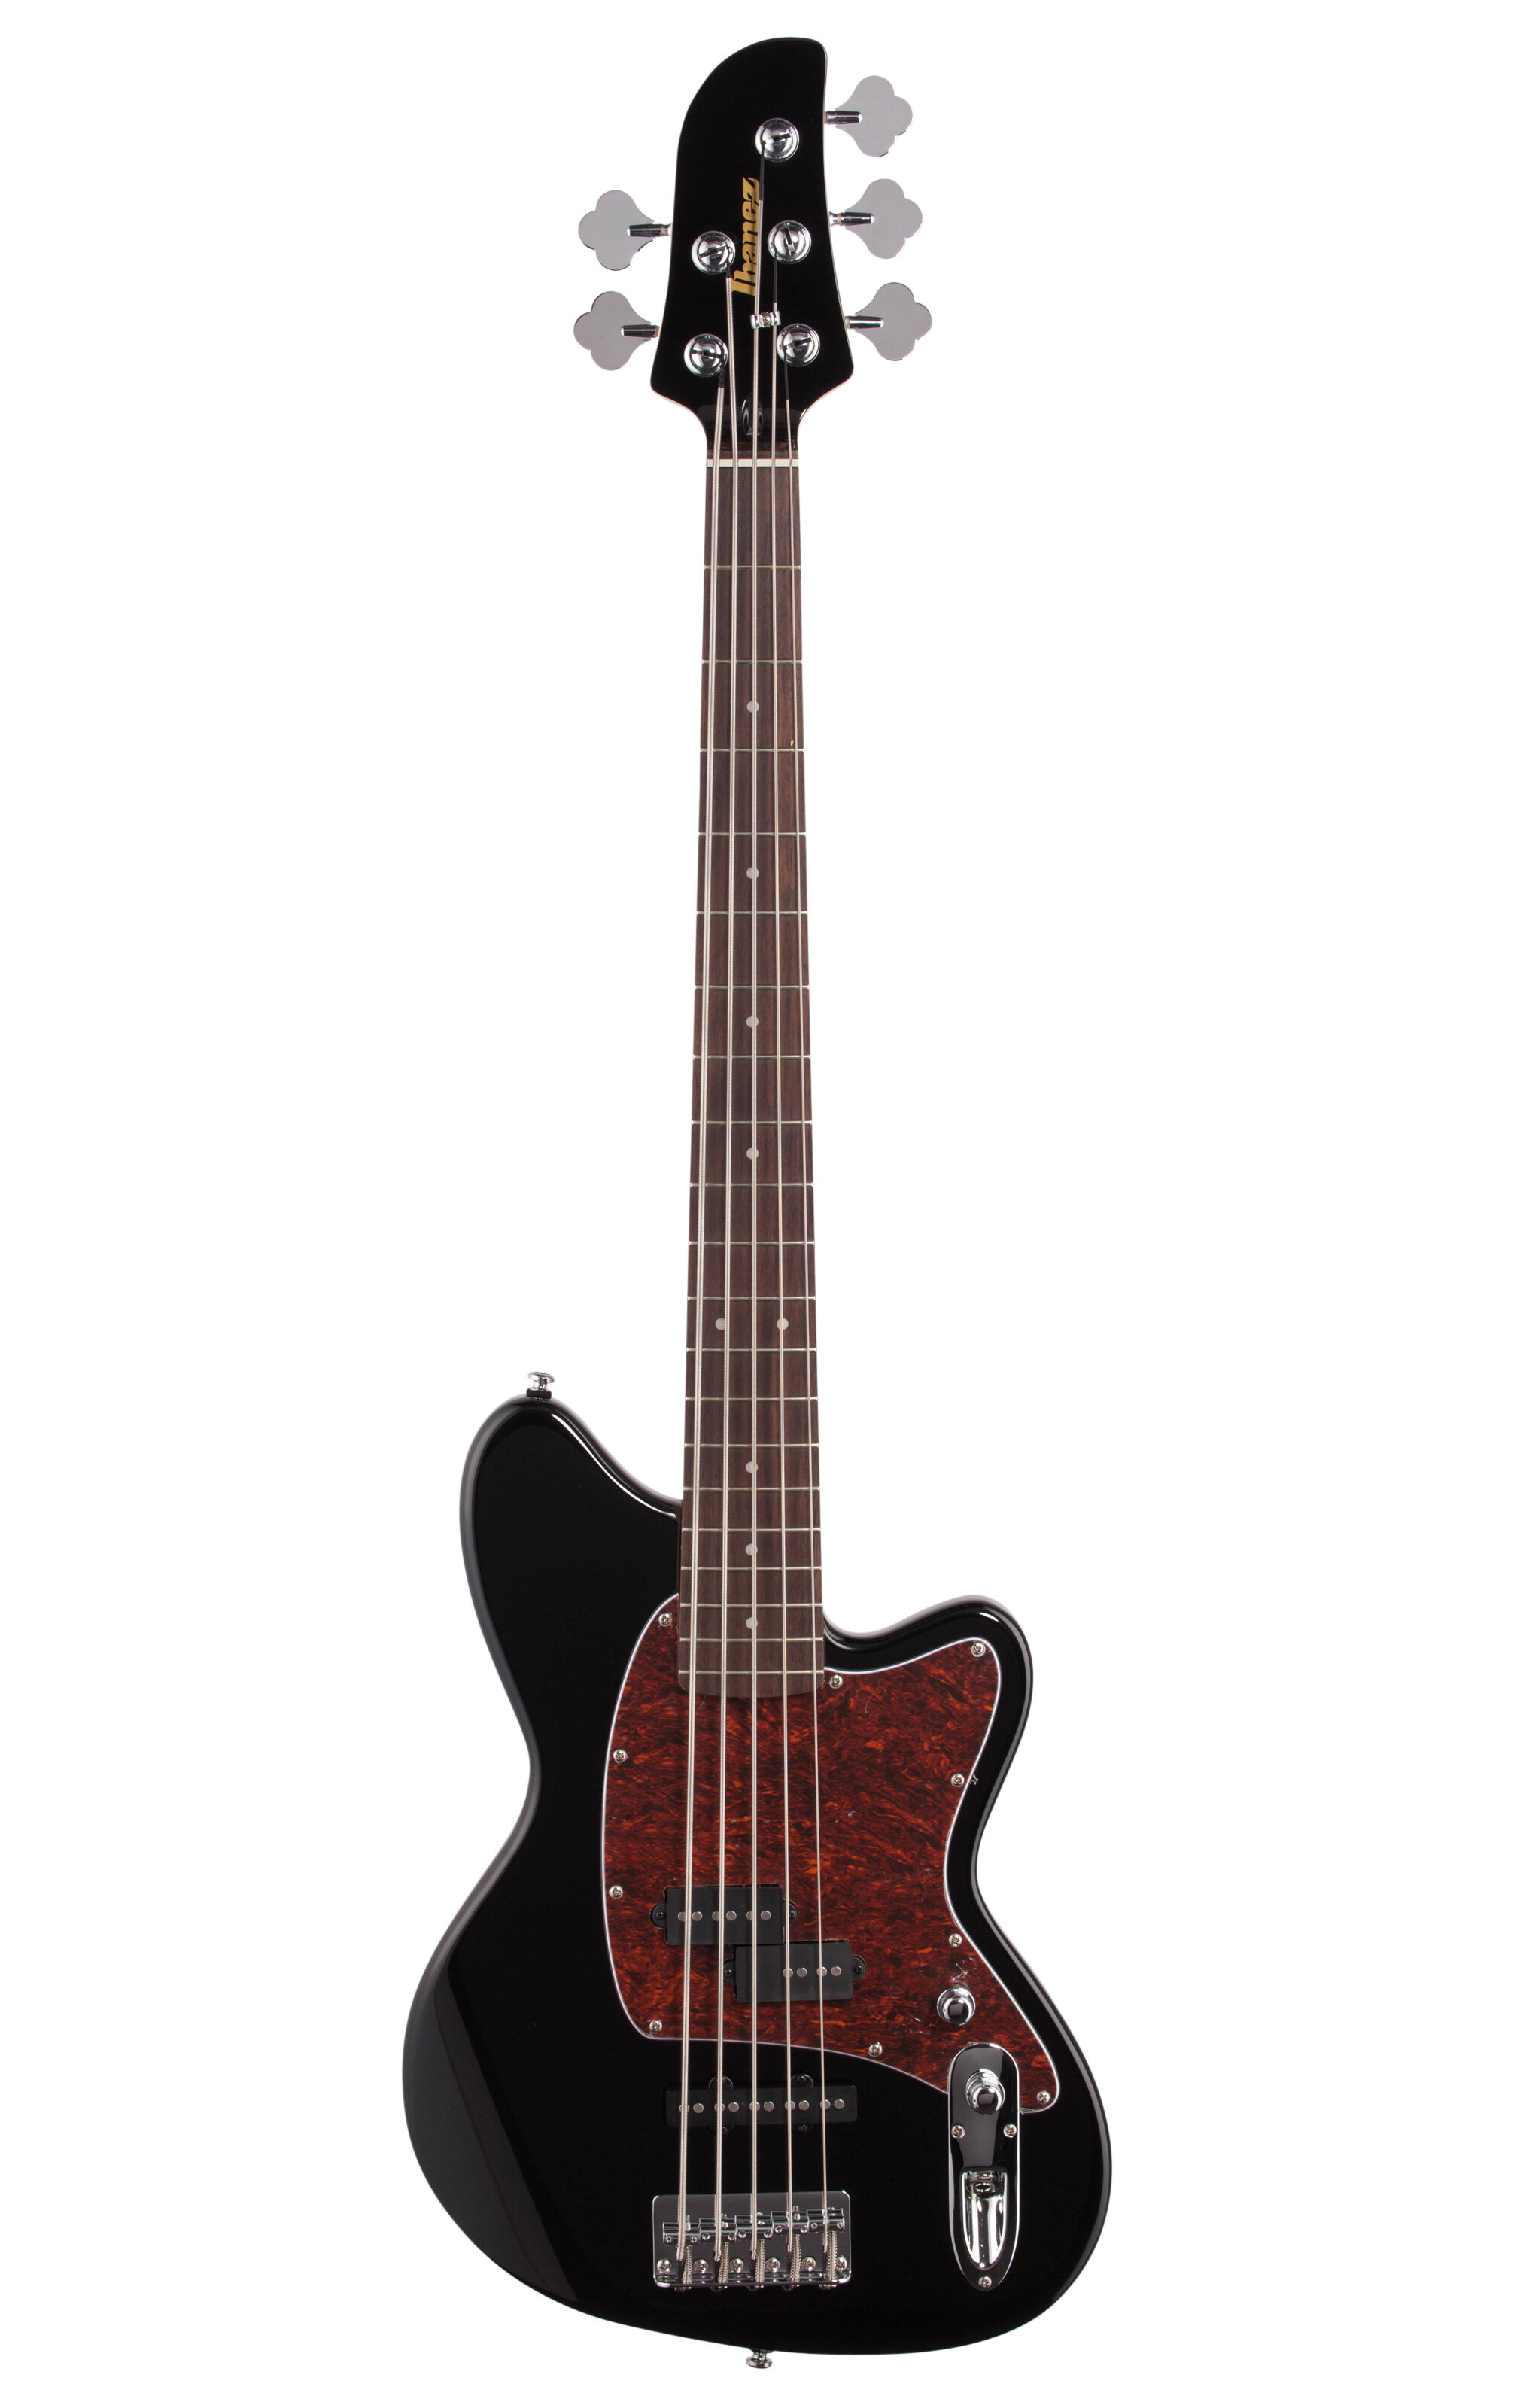 Ibanez Talman TM105 Bass Guitar Black -  TMB105BK